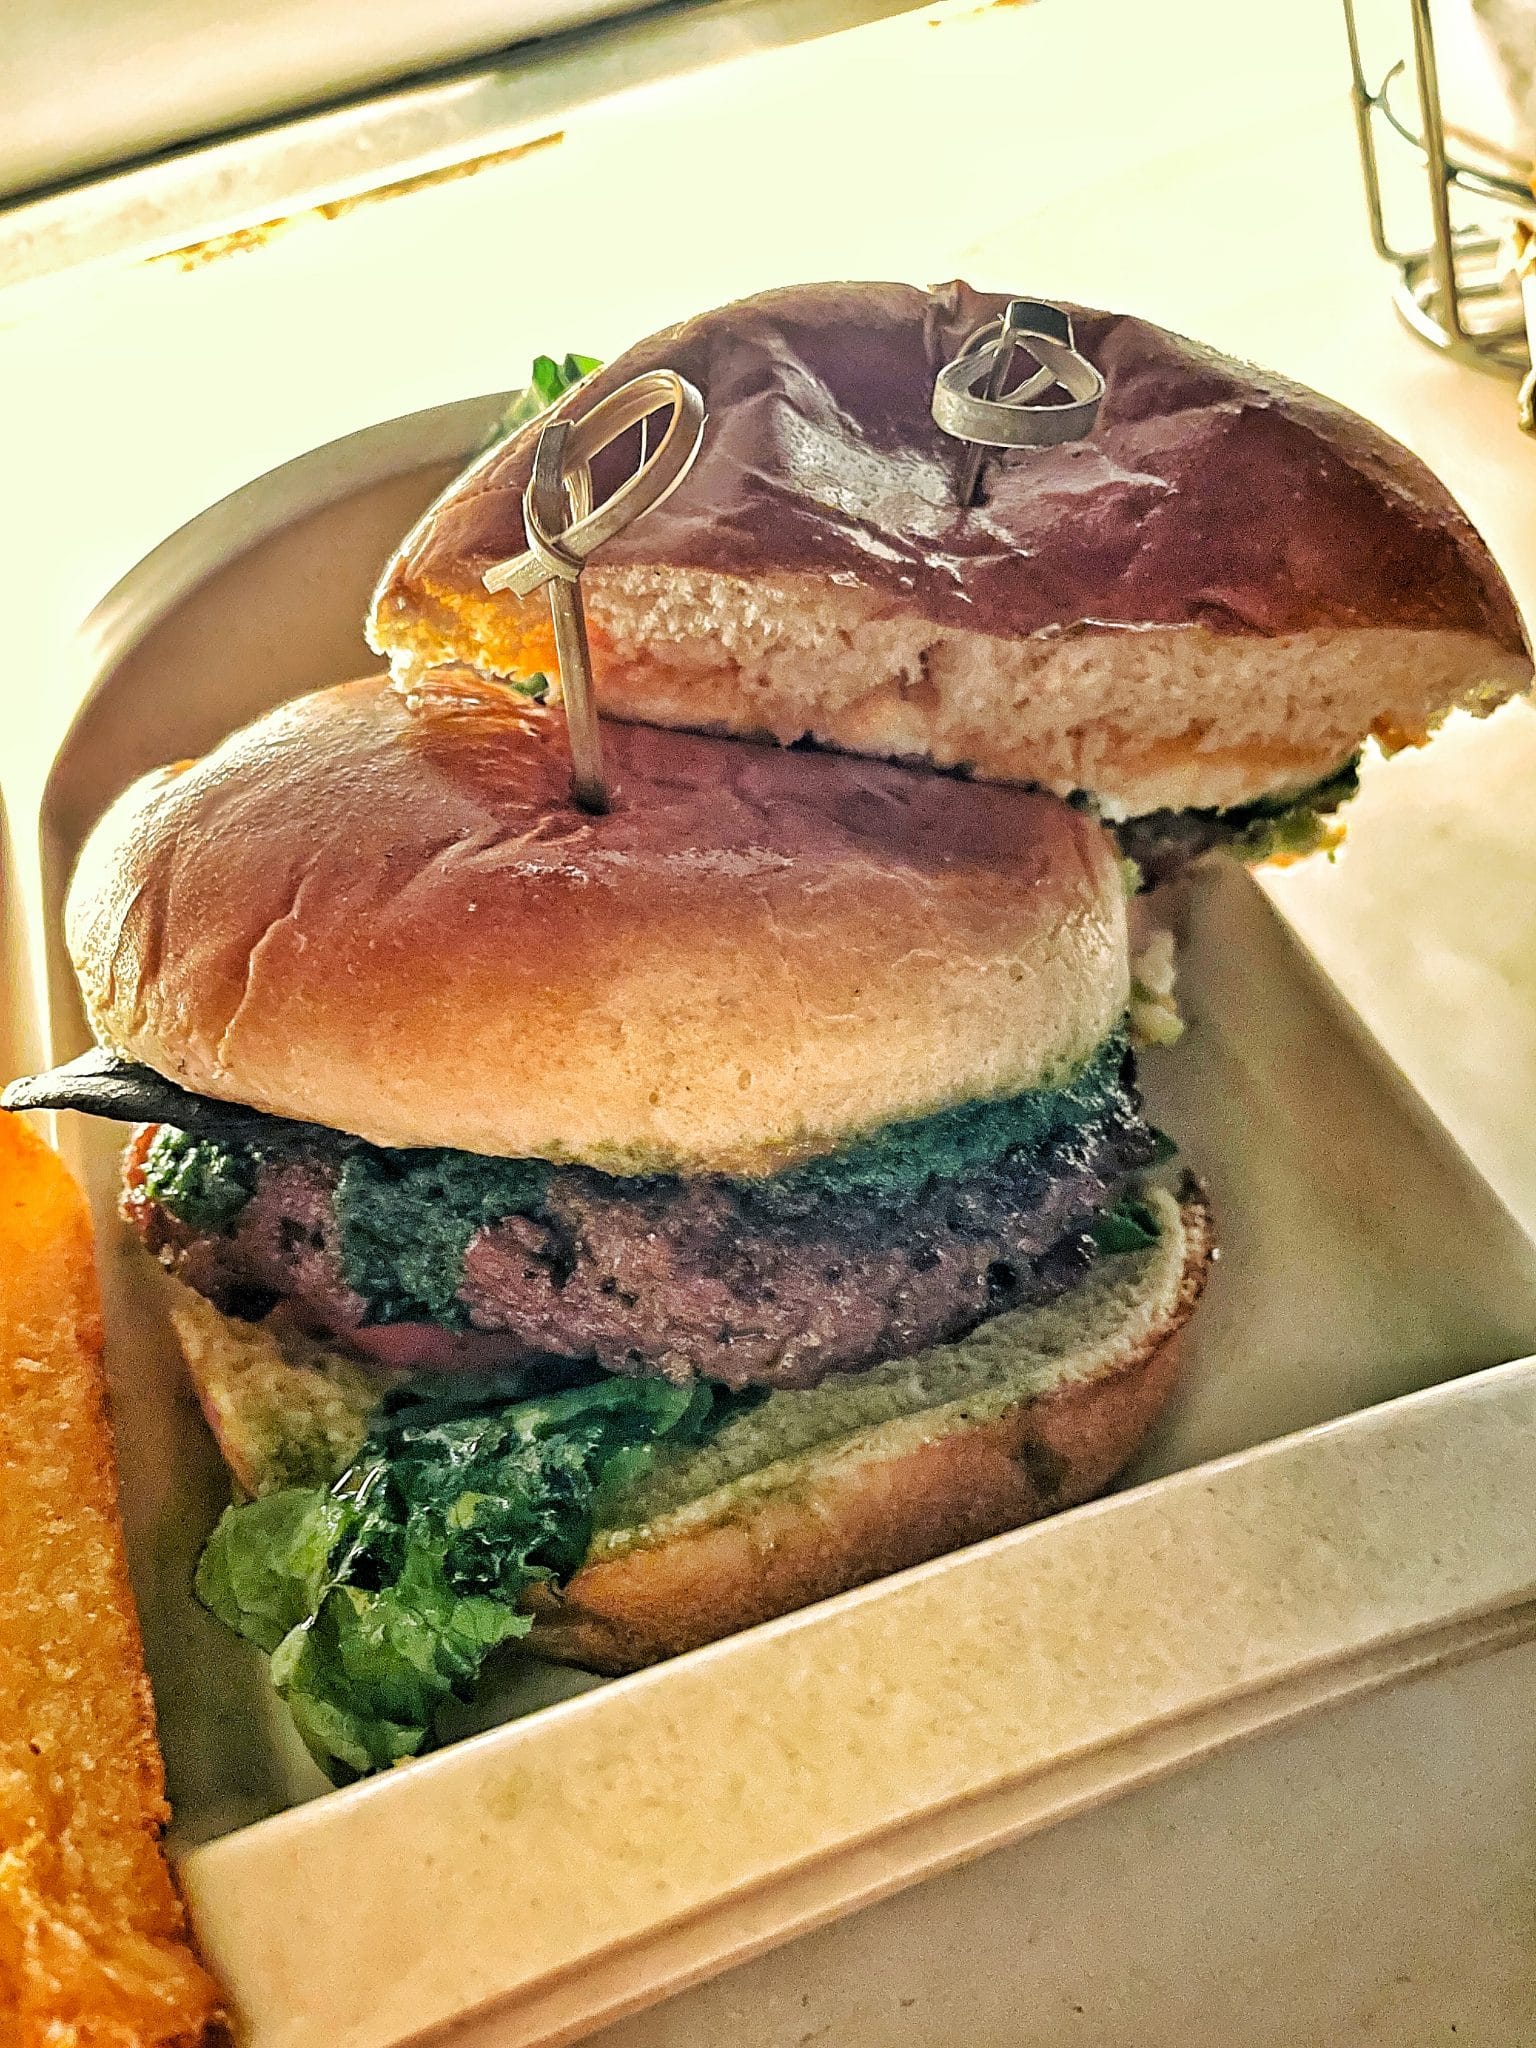 vegan Impossible burger Sci-fi Dine-in Theater